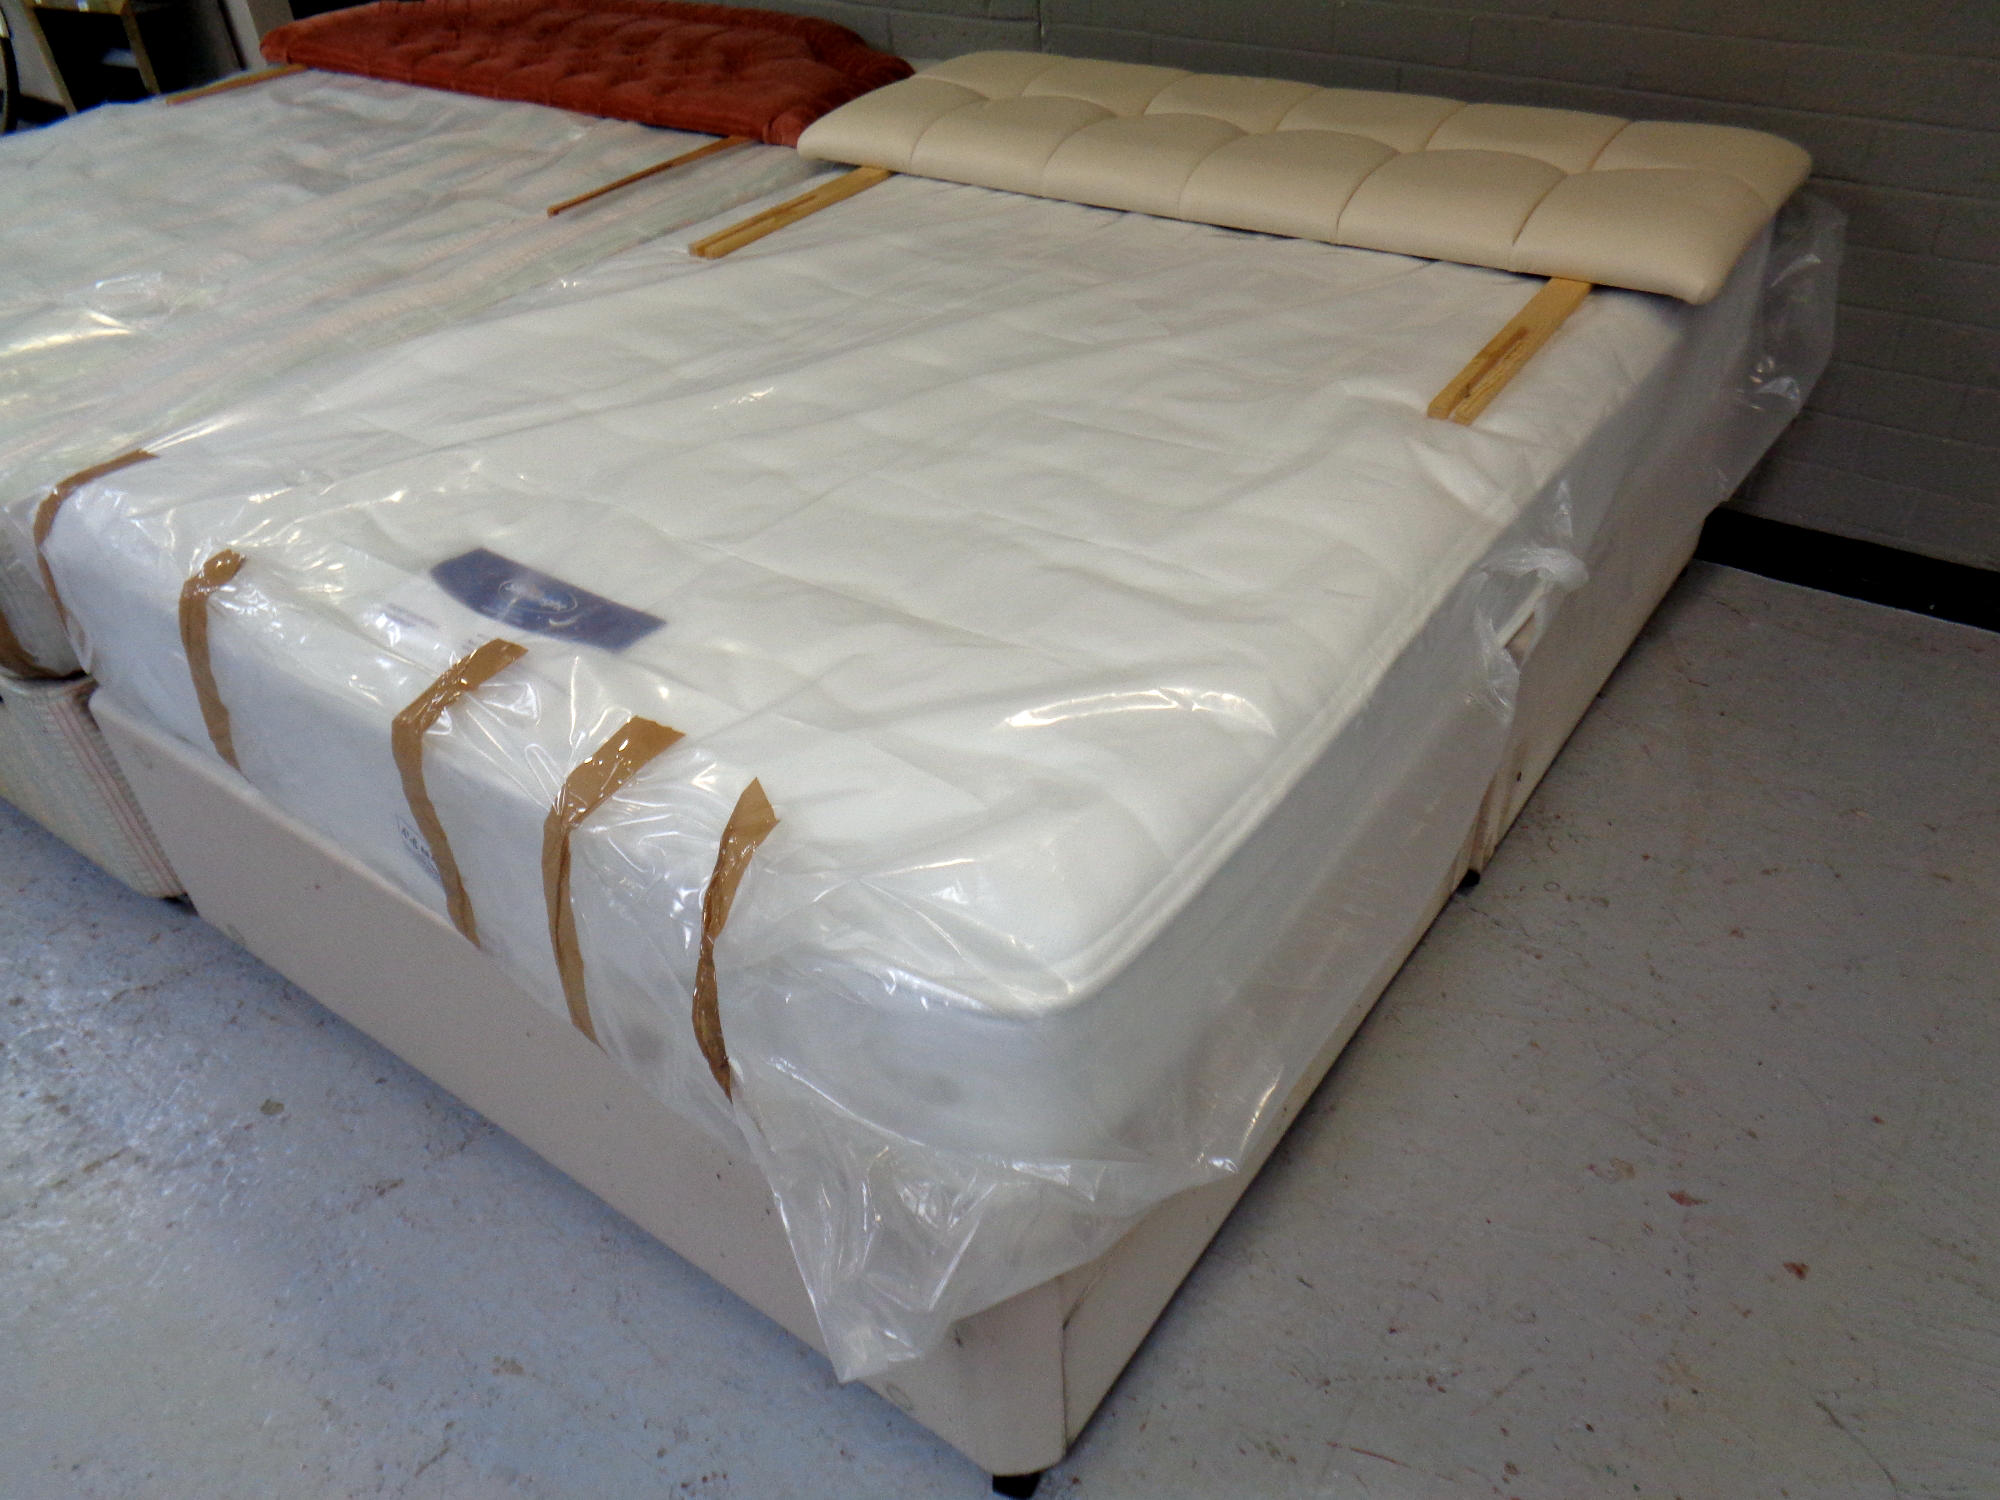 A Silent Night Pocket Essentials 1000 memory foam 4'6 mattress with storage divan and headboard